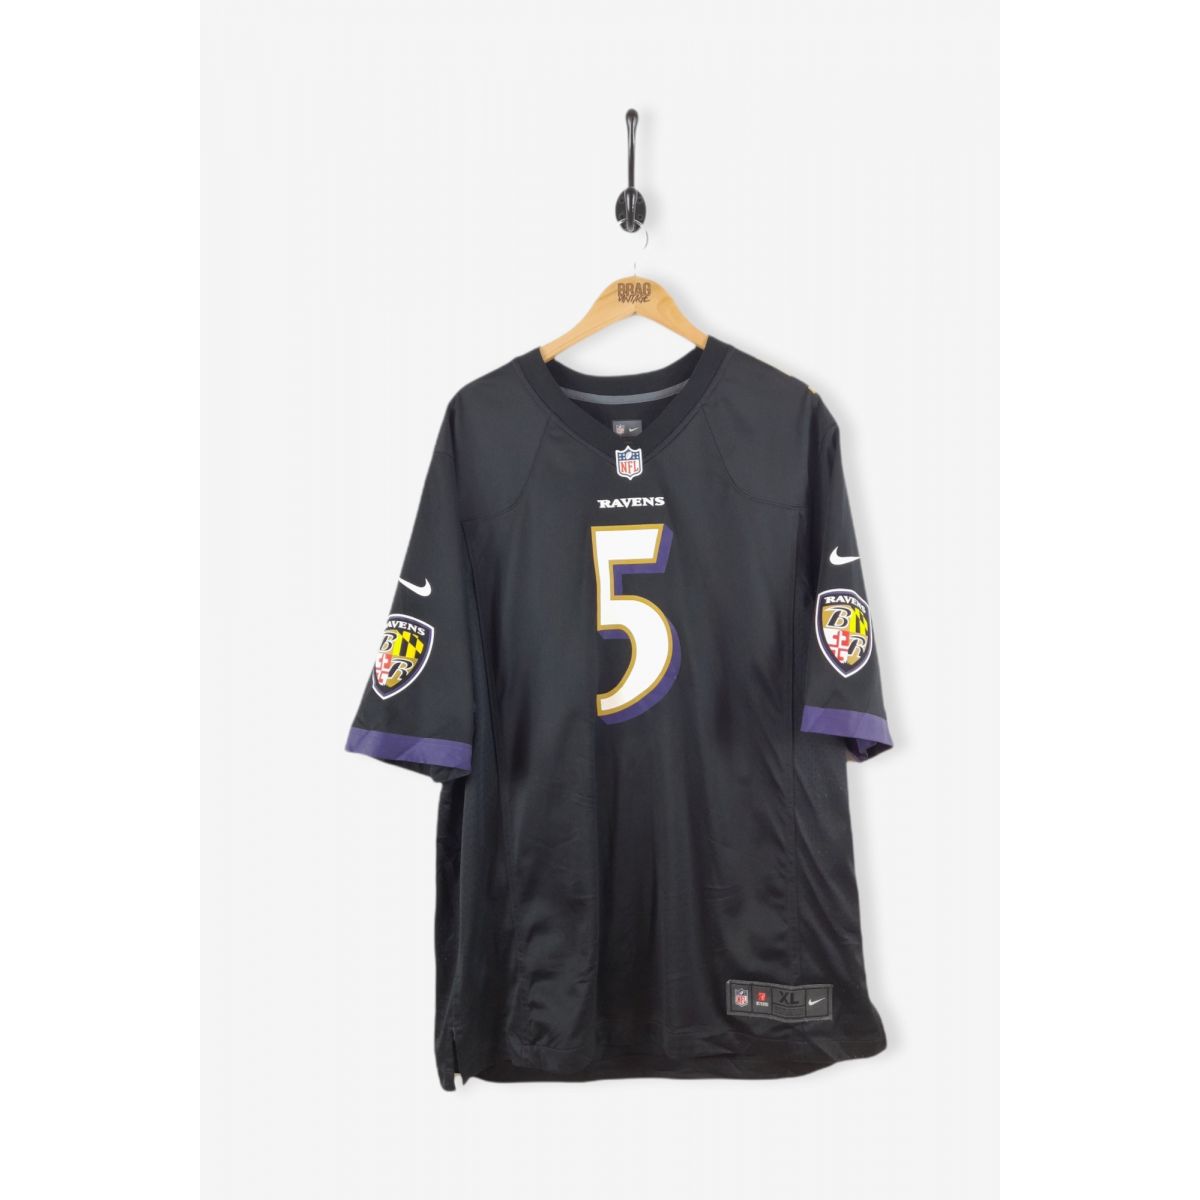 Vintage NIKE NFL Baltimore Ravens Flacco American Football Jersey Black XL